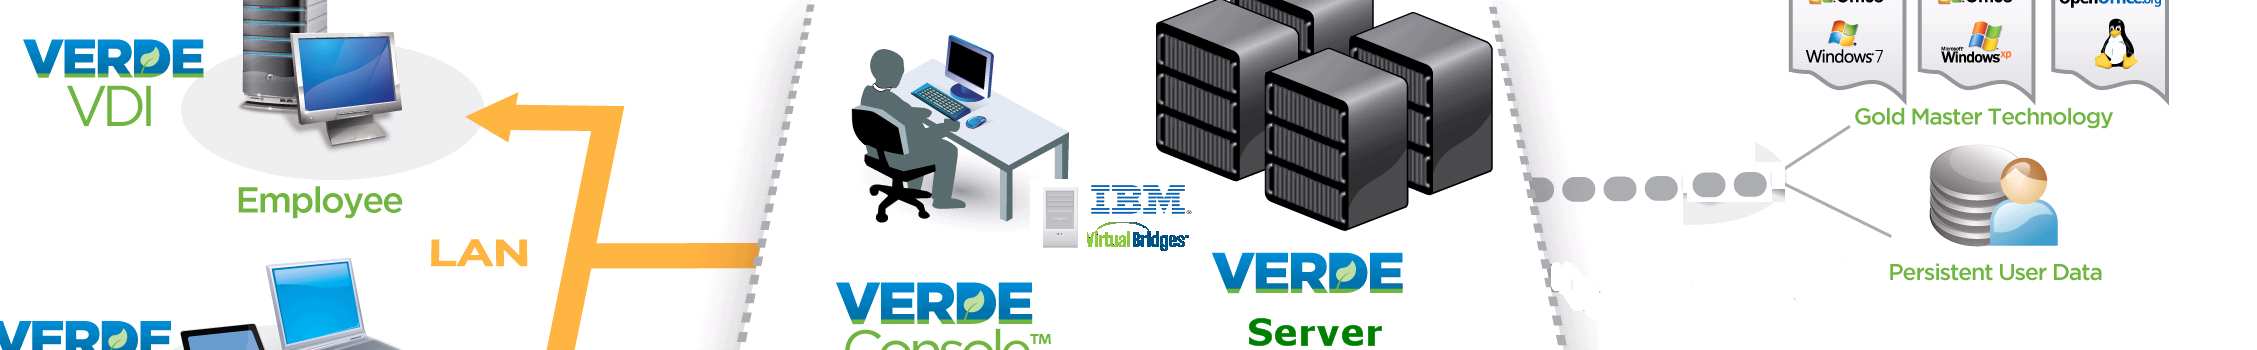 IBM Virtual Desktop for